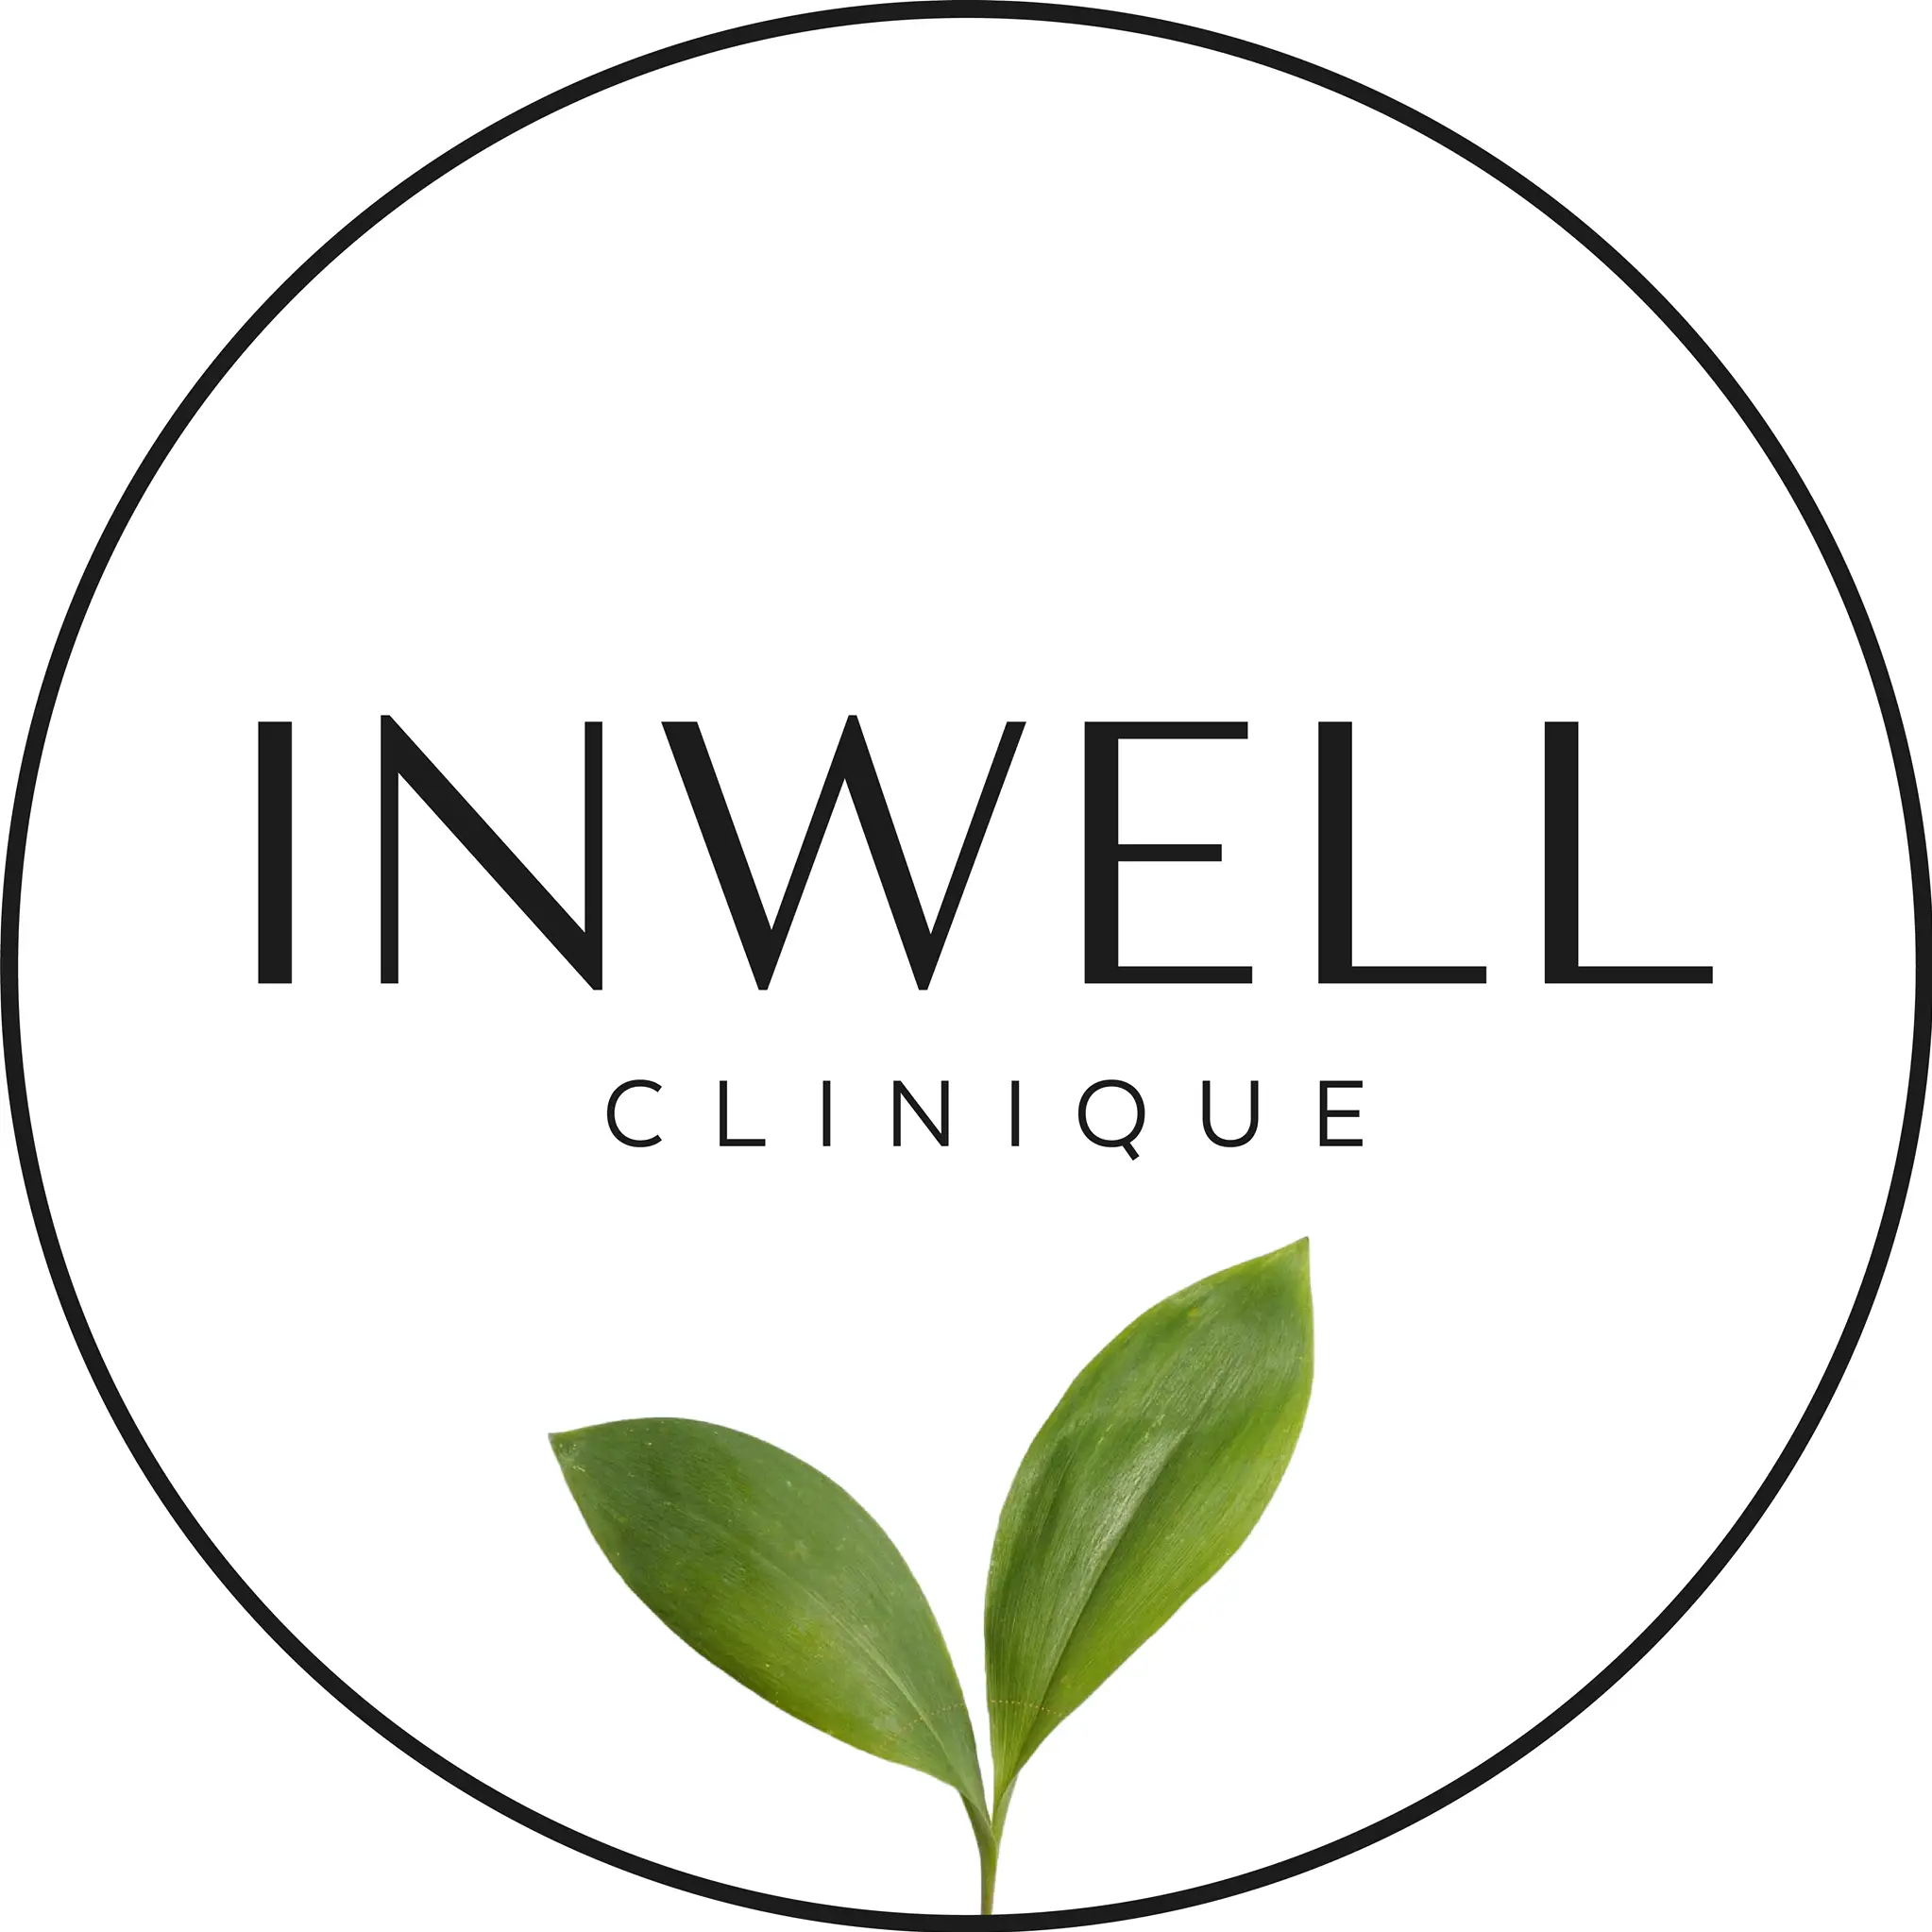 Inwell clinique logo